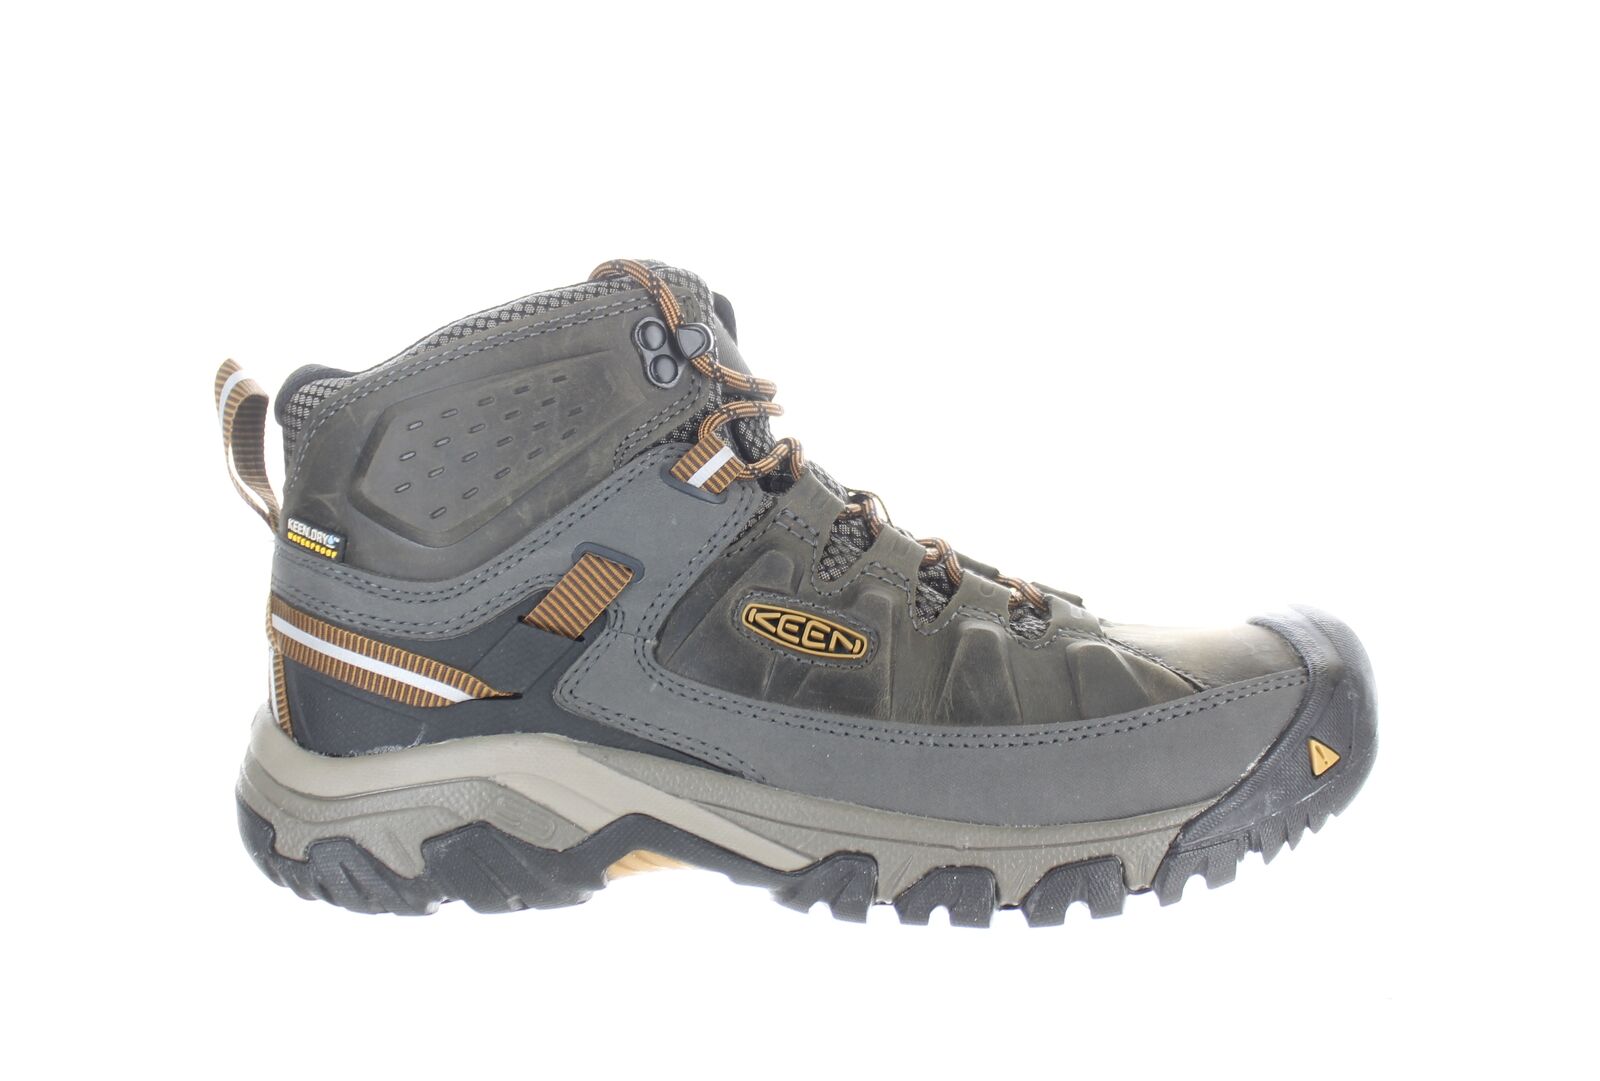 KEEN Mens Targhee Iii Mid Waterproof Black Hiking Boots Size 8.5 (2004861)